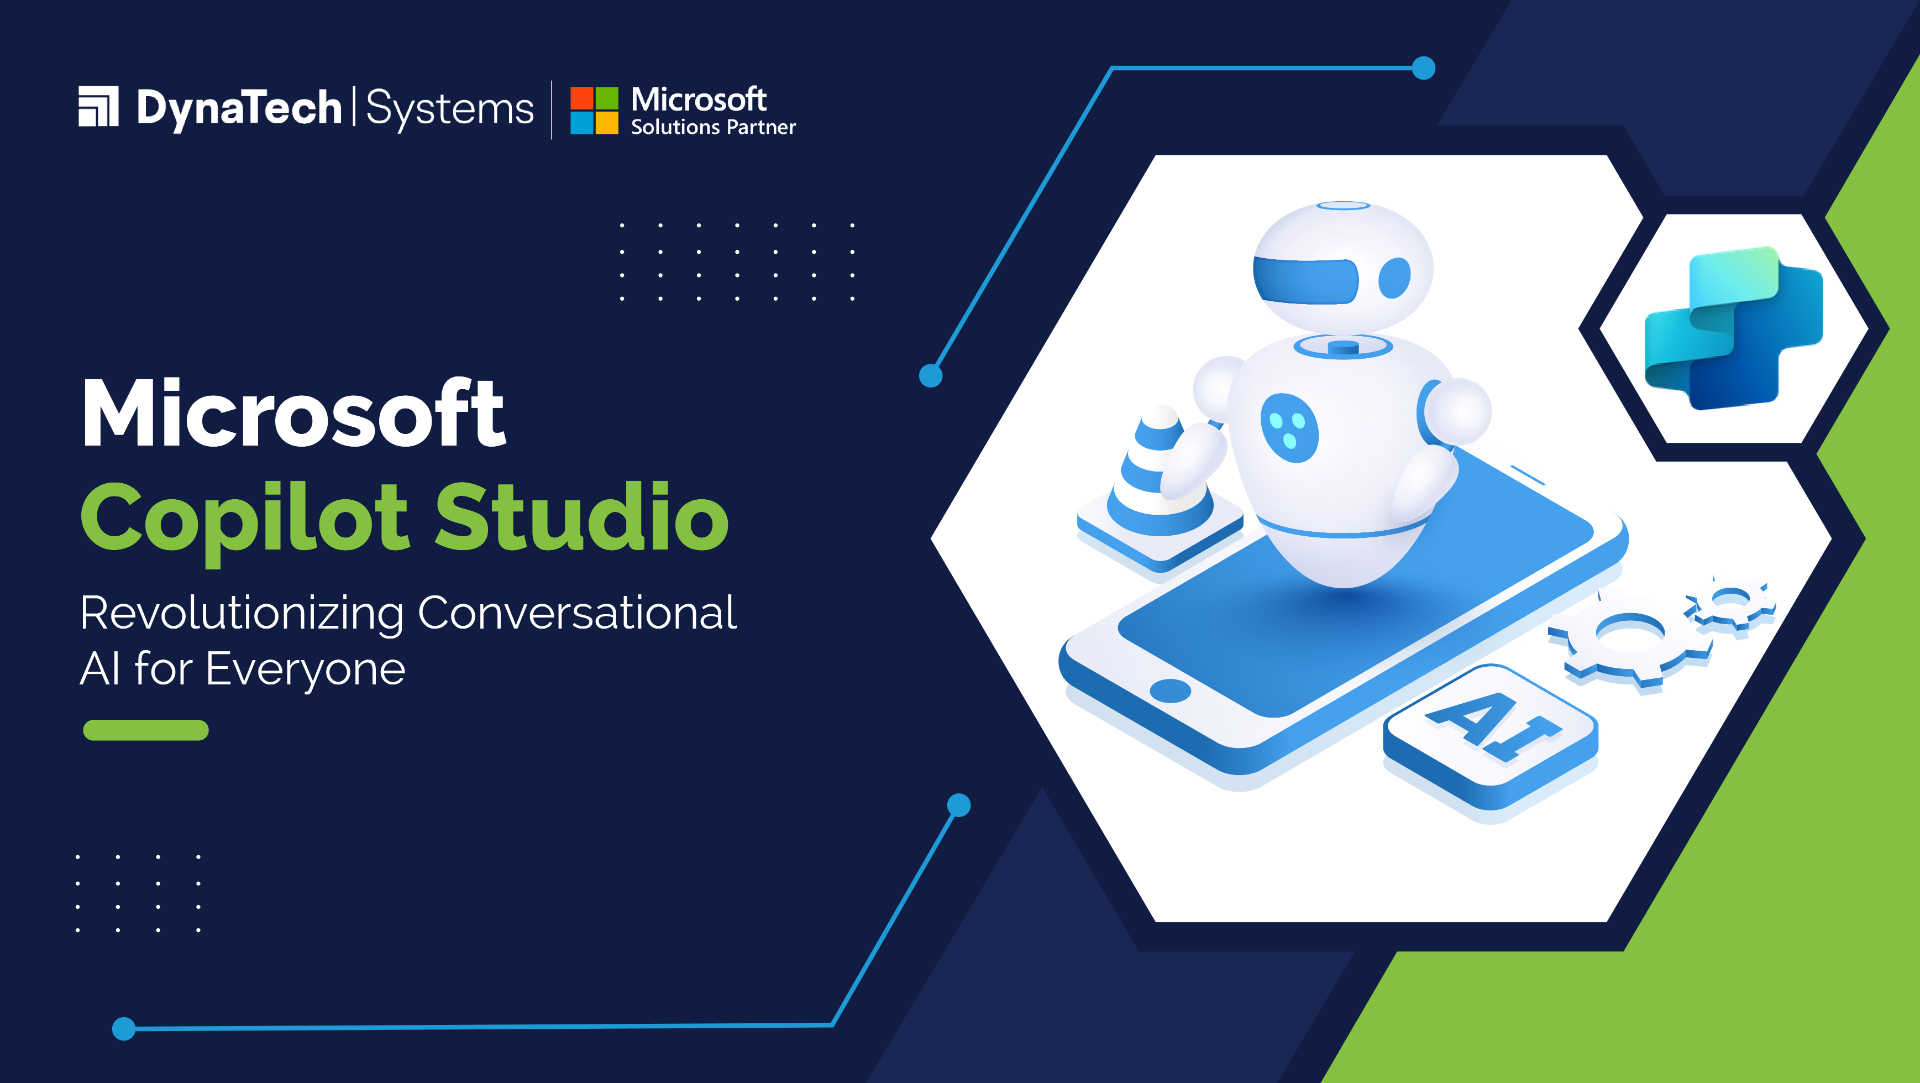 Microsoft Copilot Studio: Revolutionizing Conversational AI for Everyone